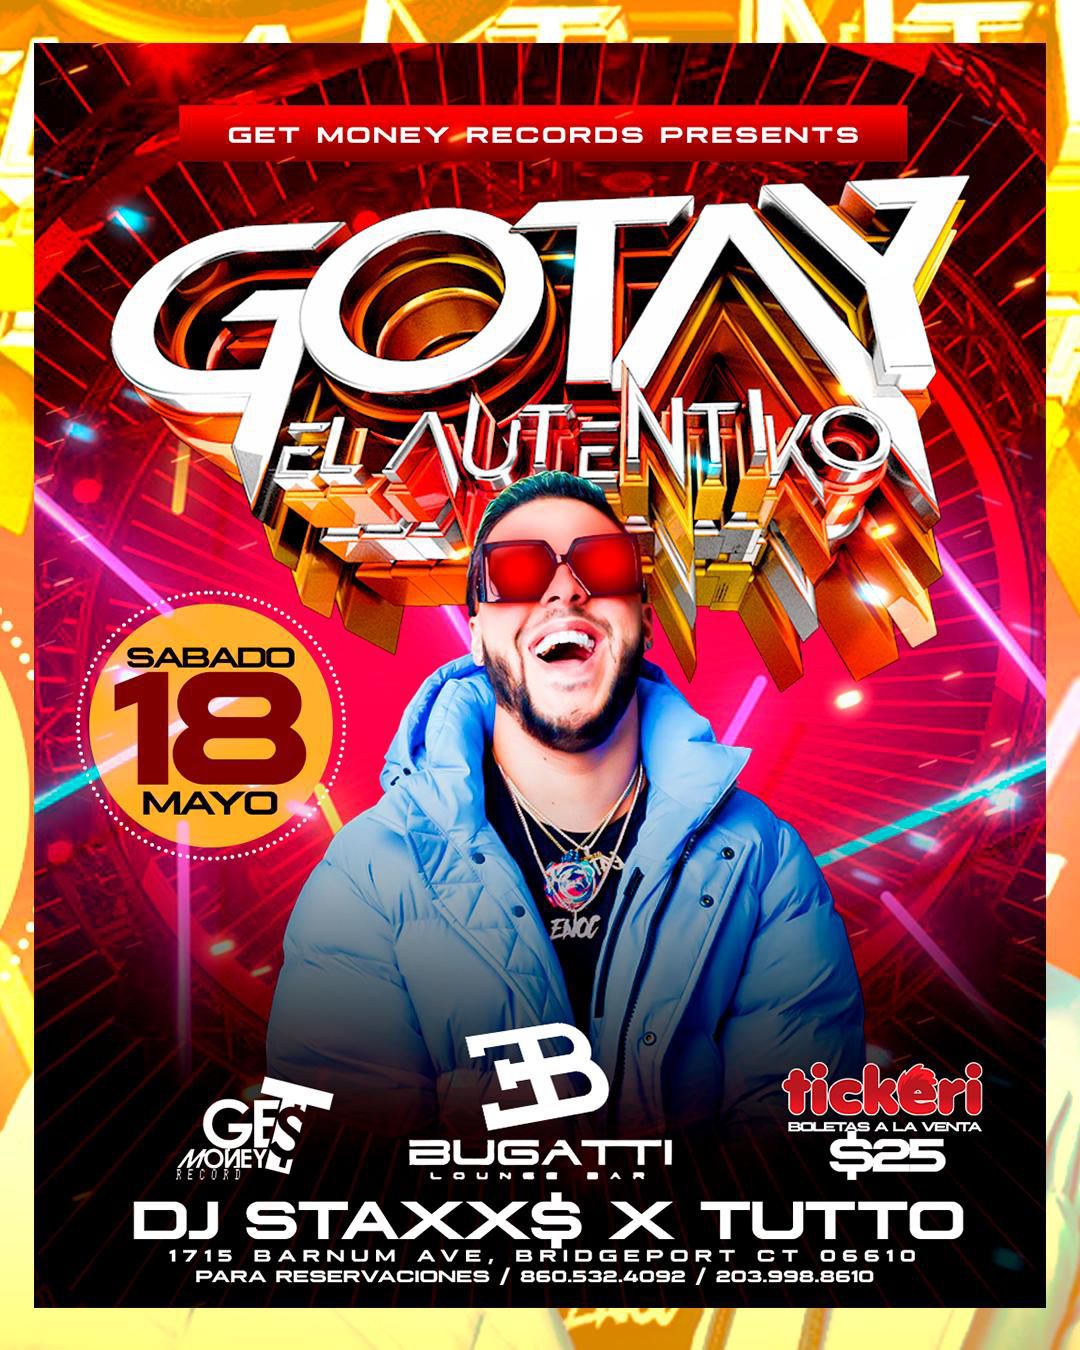 Gotay El Autentiko Tickets